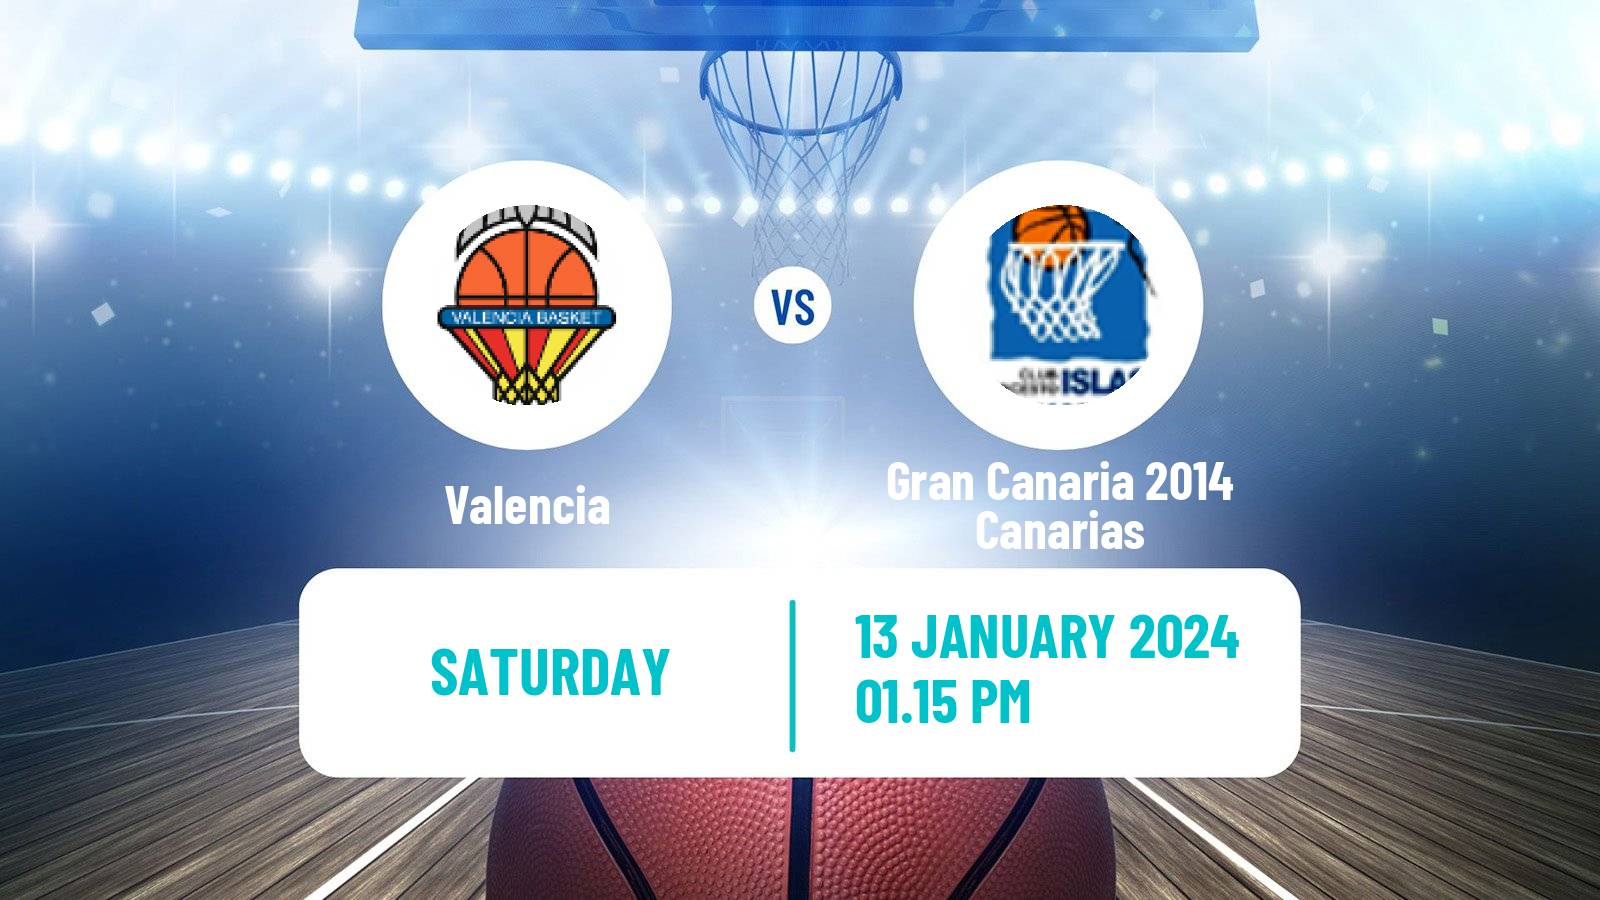 Basketball Spanish Liga Femenina Basketball Valencia - Gran Canaria 2014 Canarias